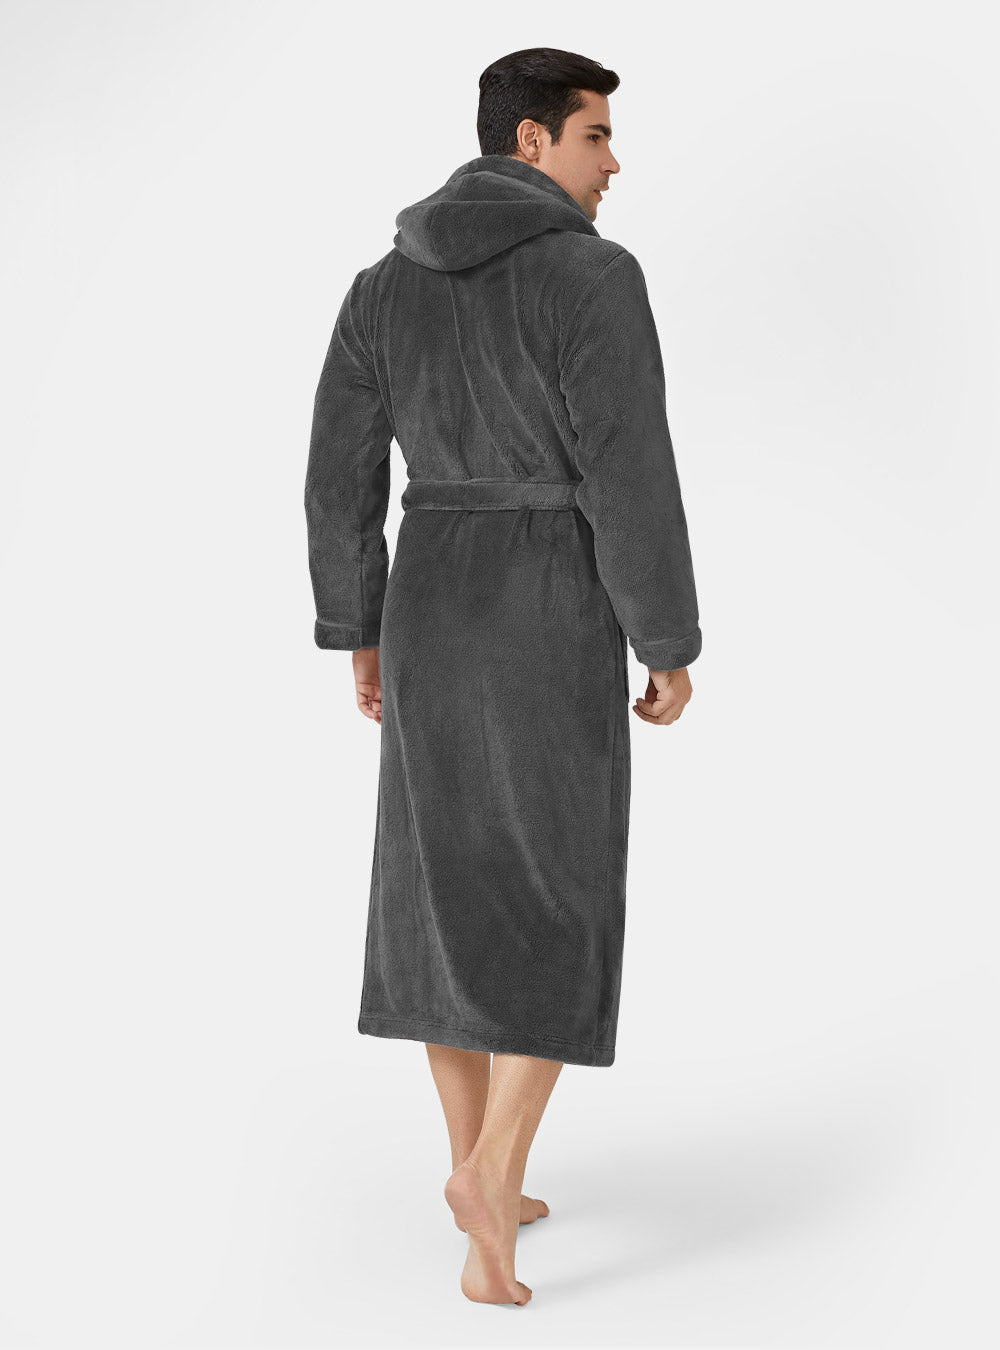 Adr Men's Classic Winter Robe, Full Length Hooded Bathrobe, Plush Fleece  Burgundy With Black Contrast Xl : Target